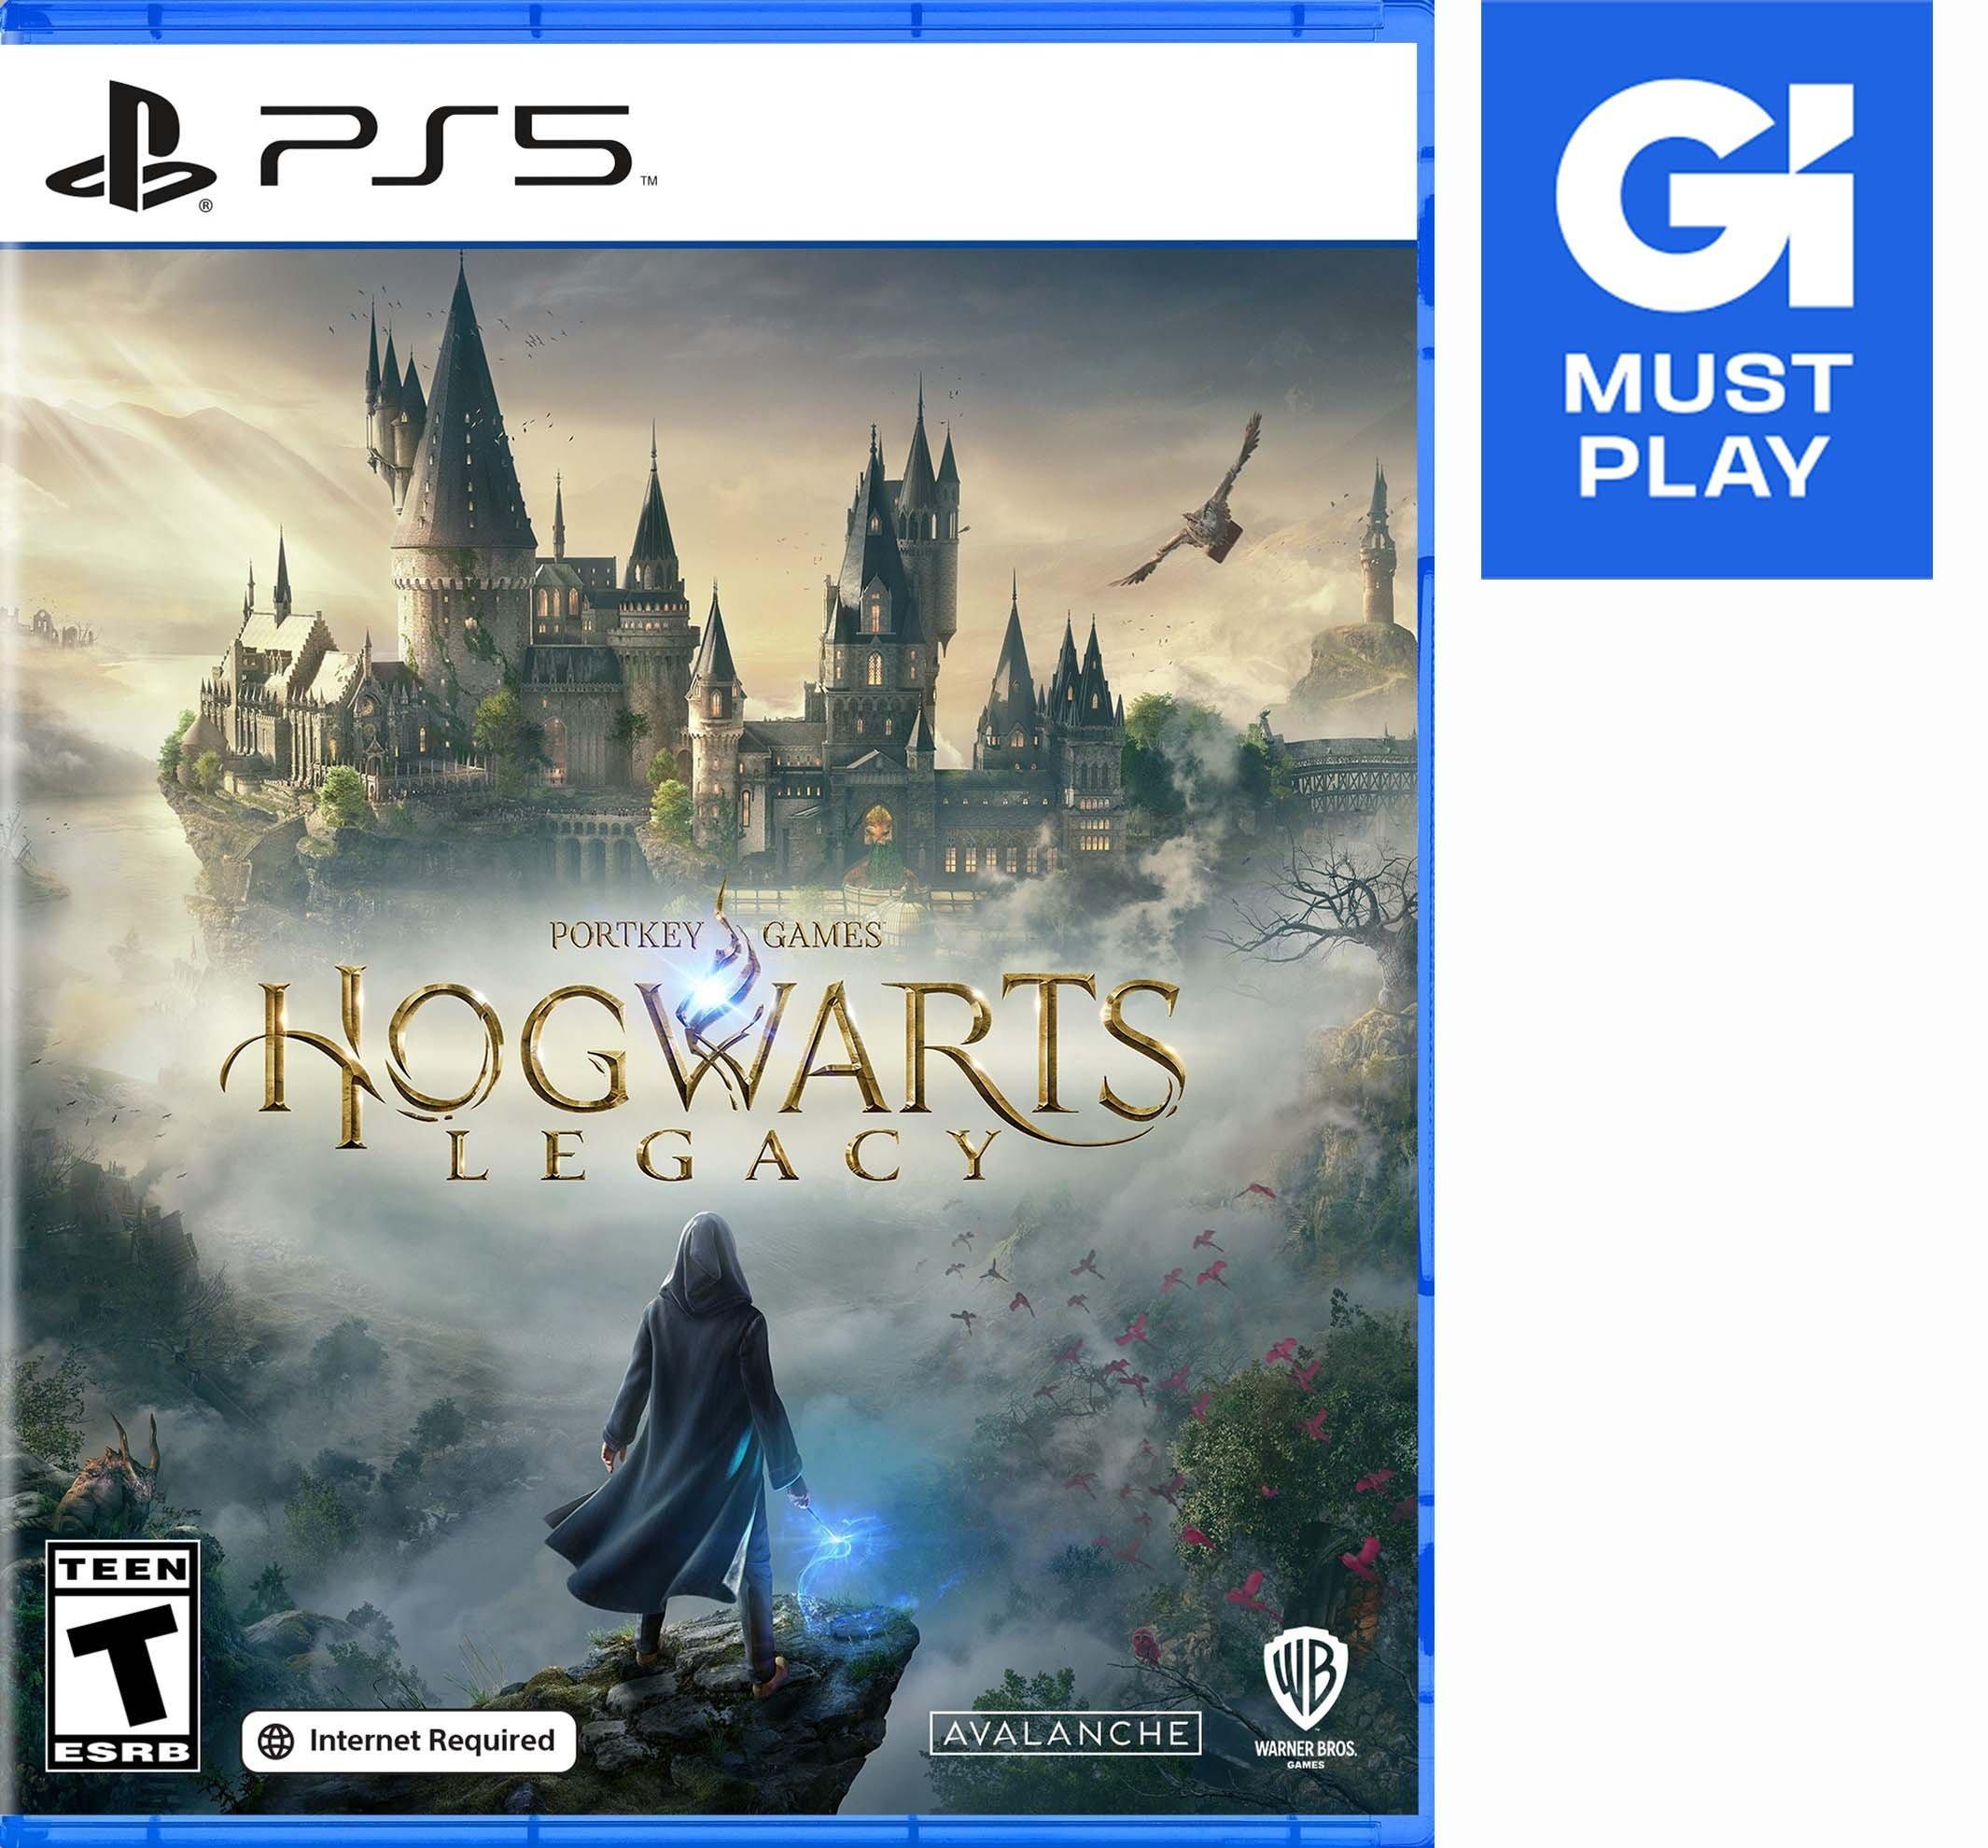 Hogwarts Legacy - PlayStation 5 | Warner Bros. Games | GameStop